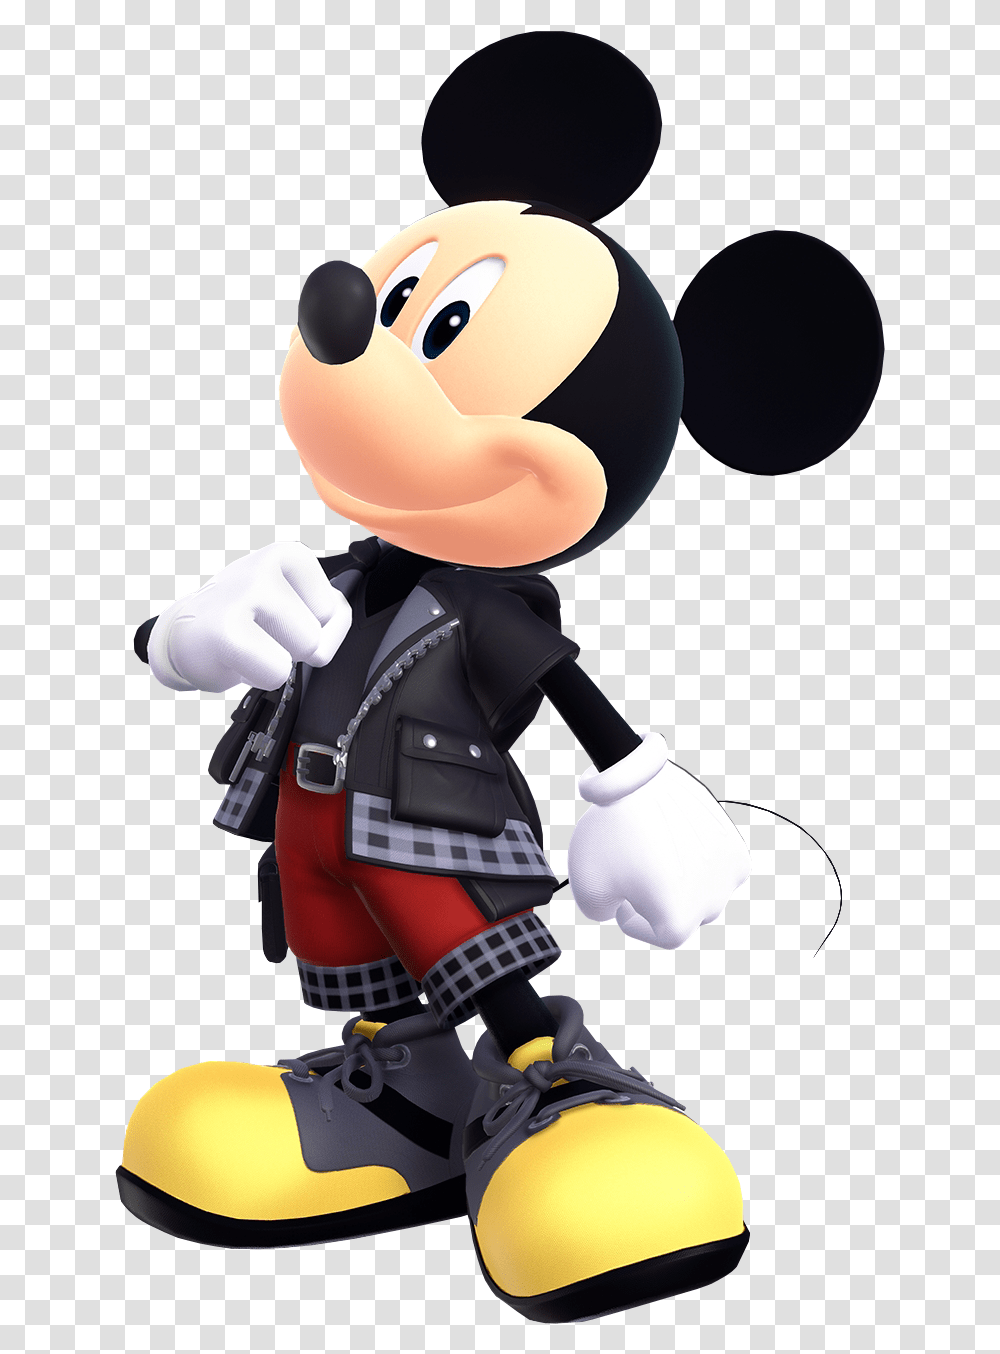 Cerberus Kingdom Hearts Mickey Mouse Kingdom Hearts 3, Toy, Hand, Ninja, Figurine Transparent Png